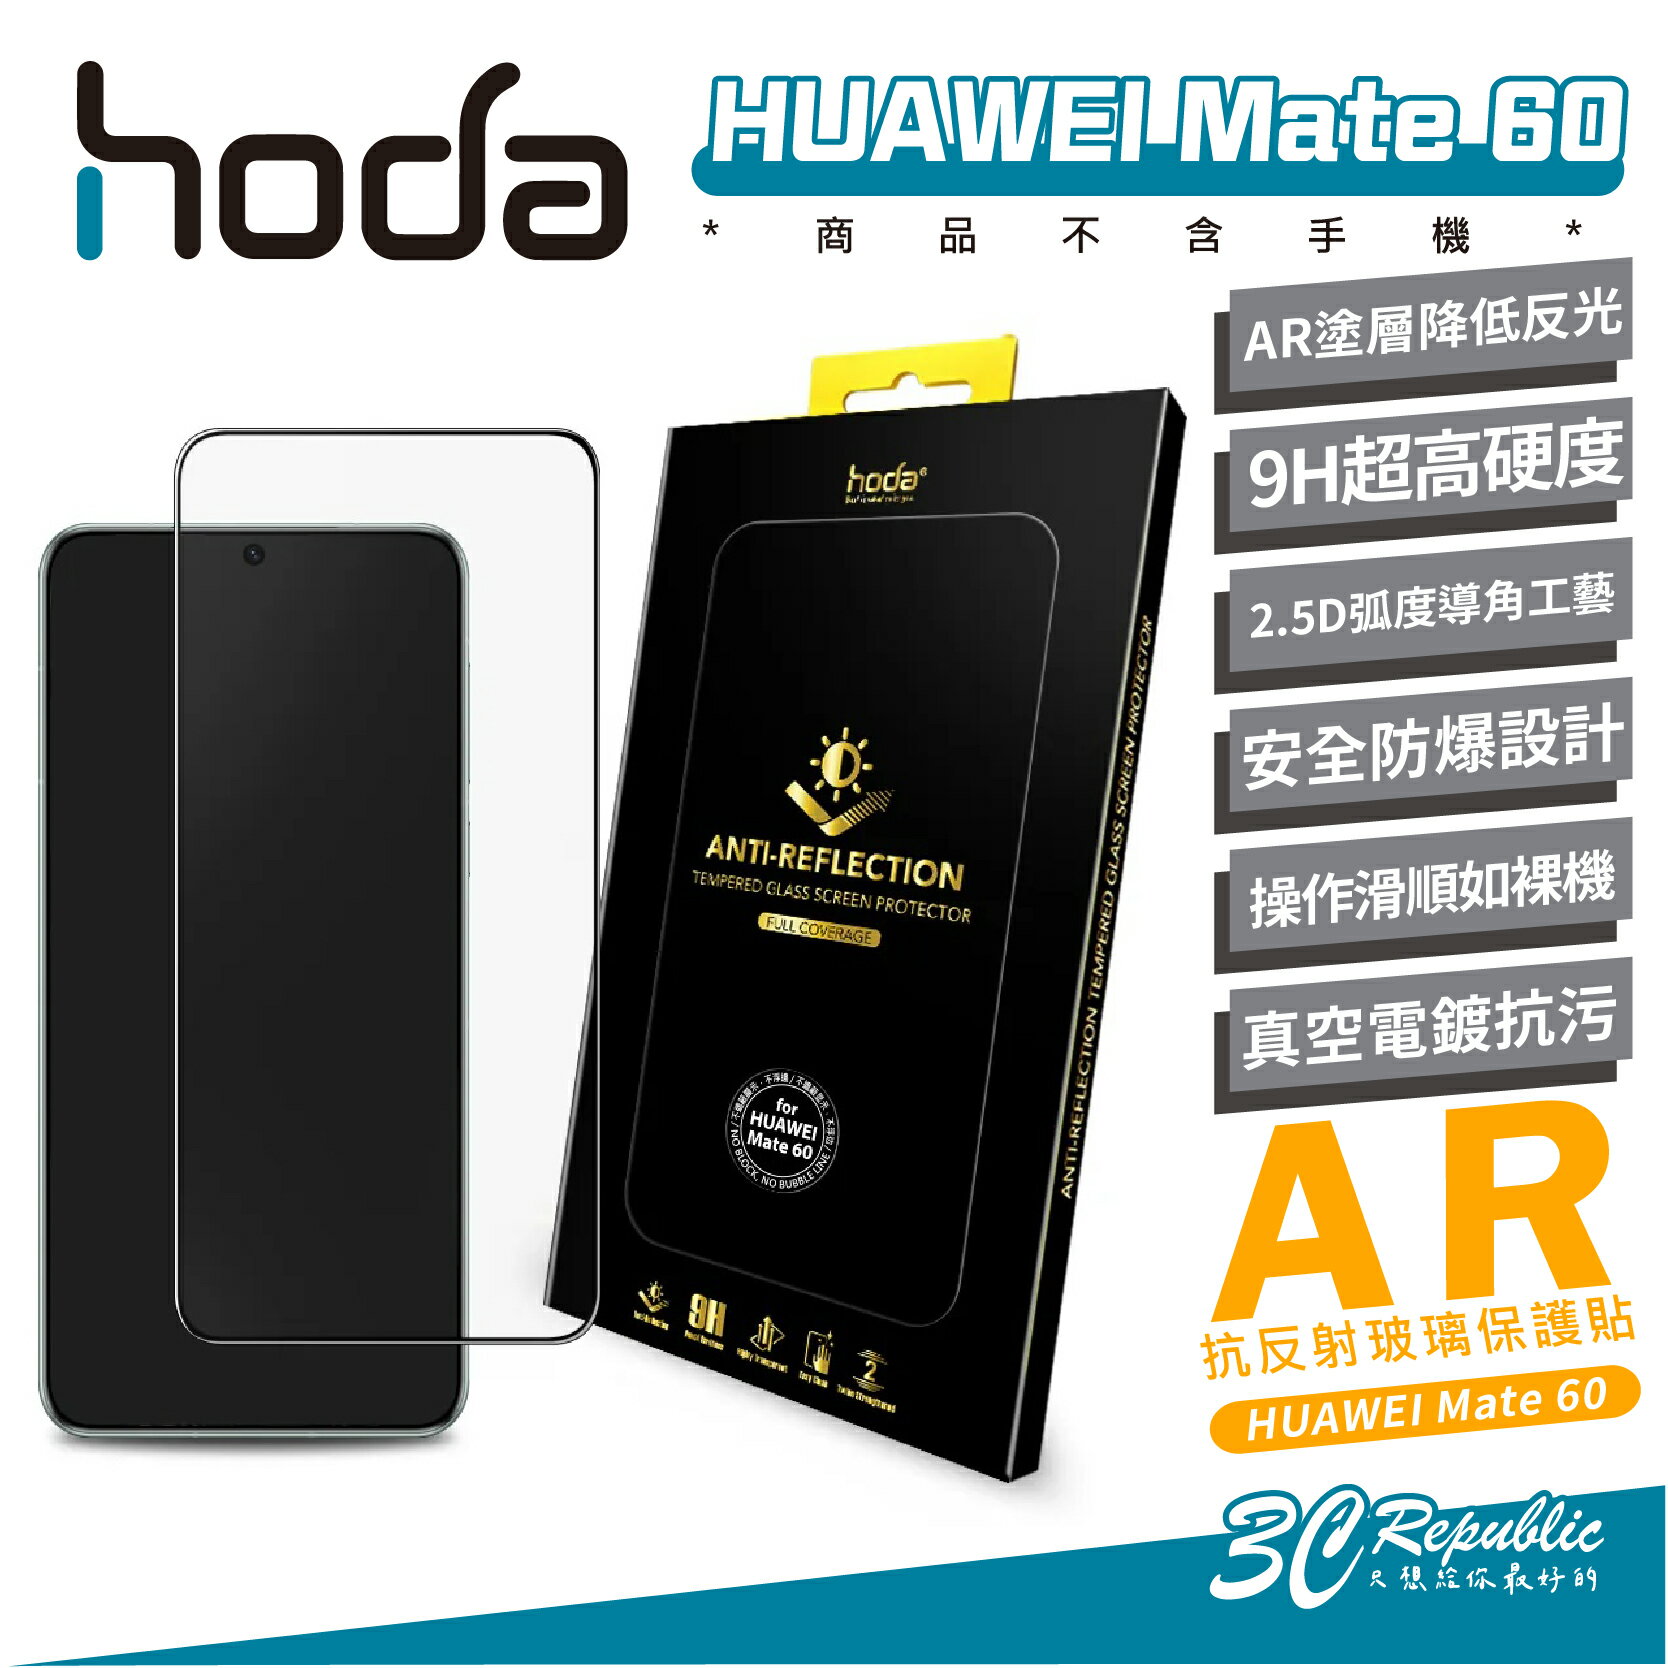 Hoda 好貼 AR 抗反射 9H 手機 玻璃貼 保護貼 螢幕貼 適用 華為 HUAWEI Mate 60【APP下單8%點數回饋】